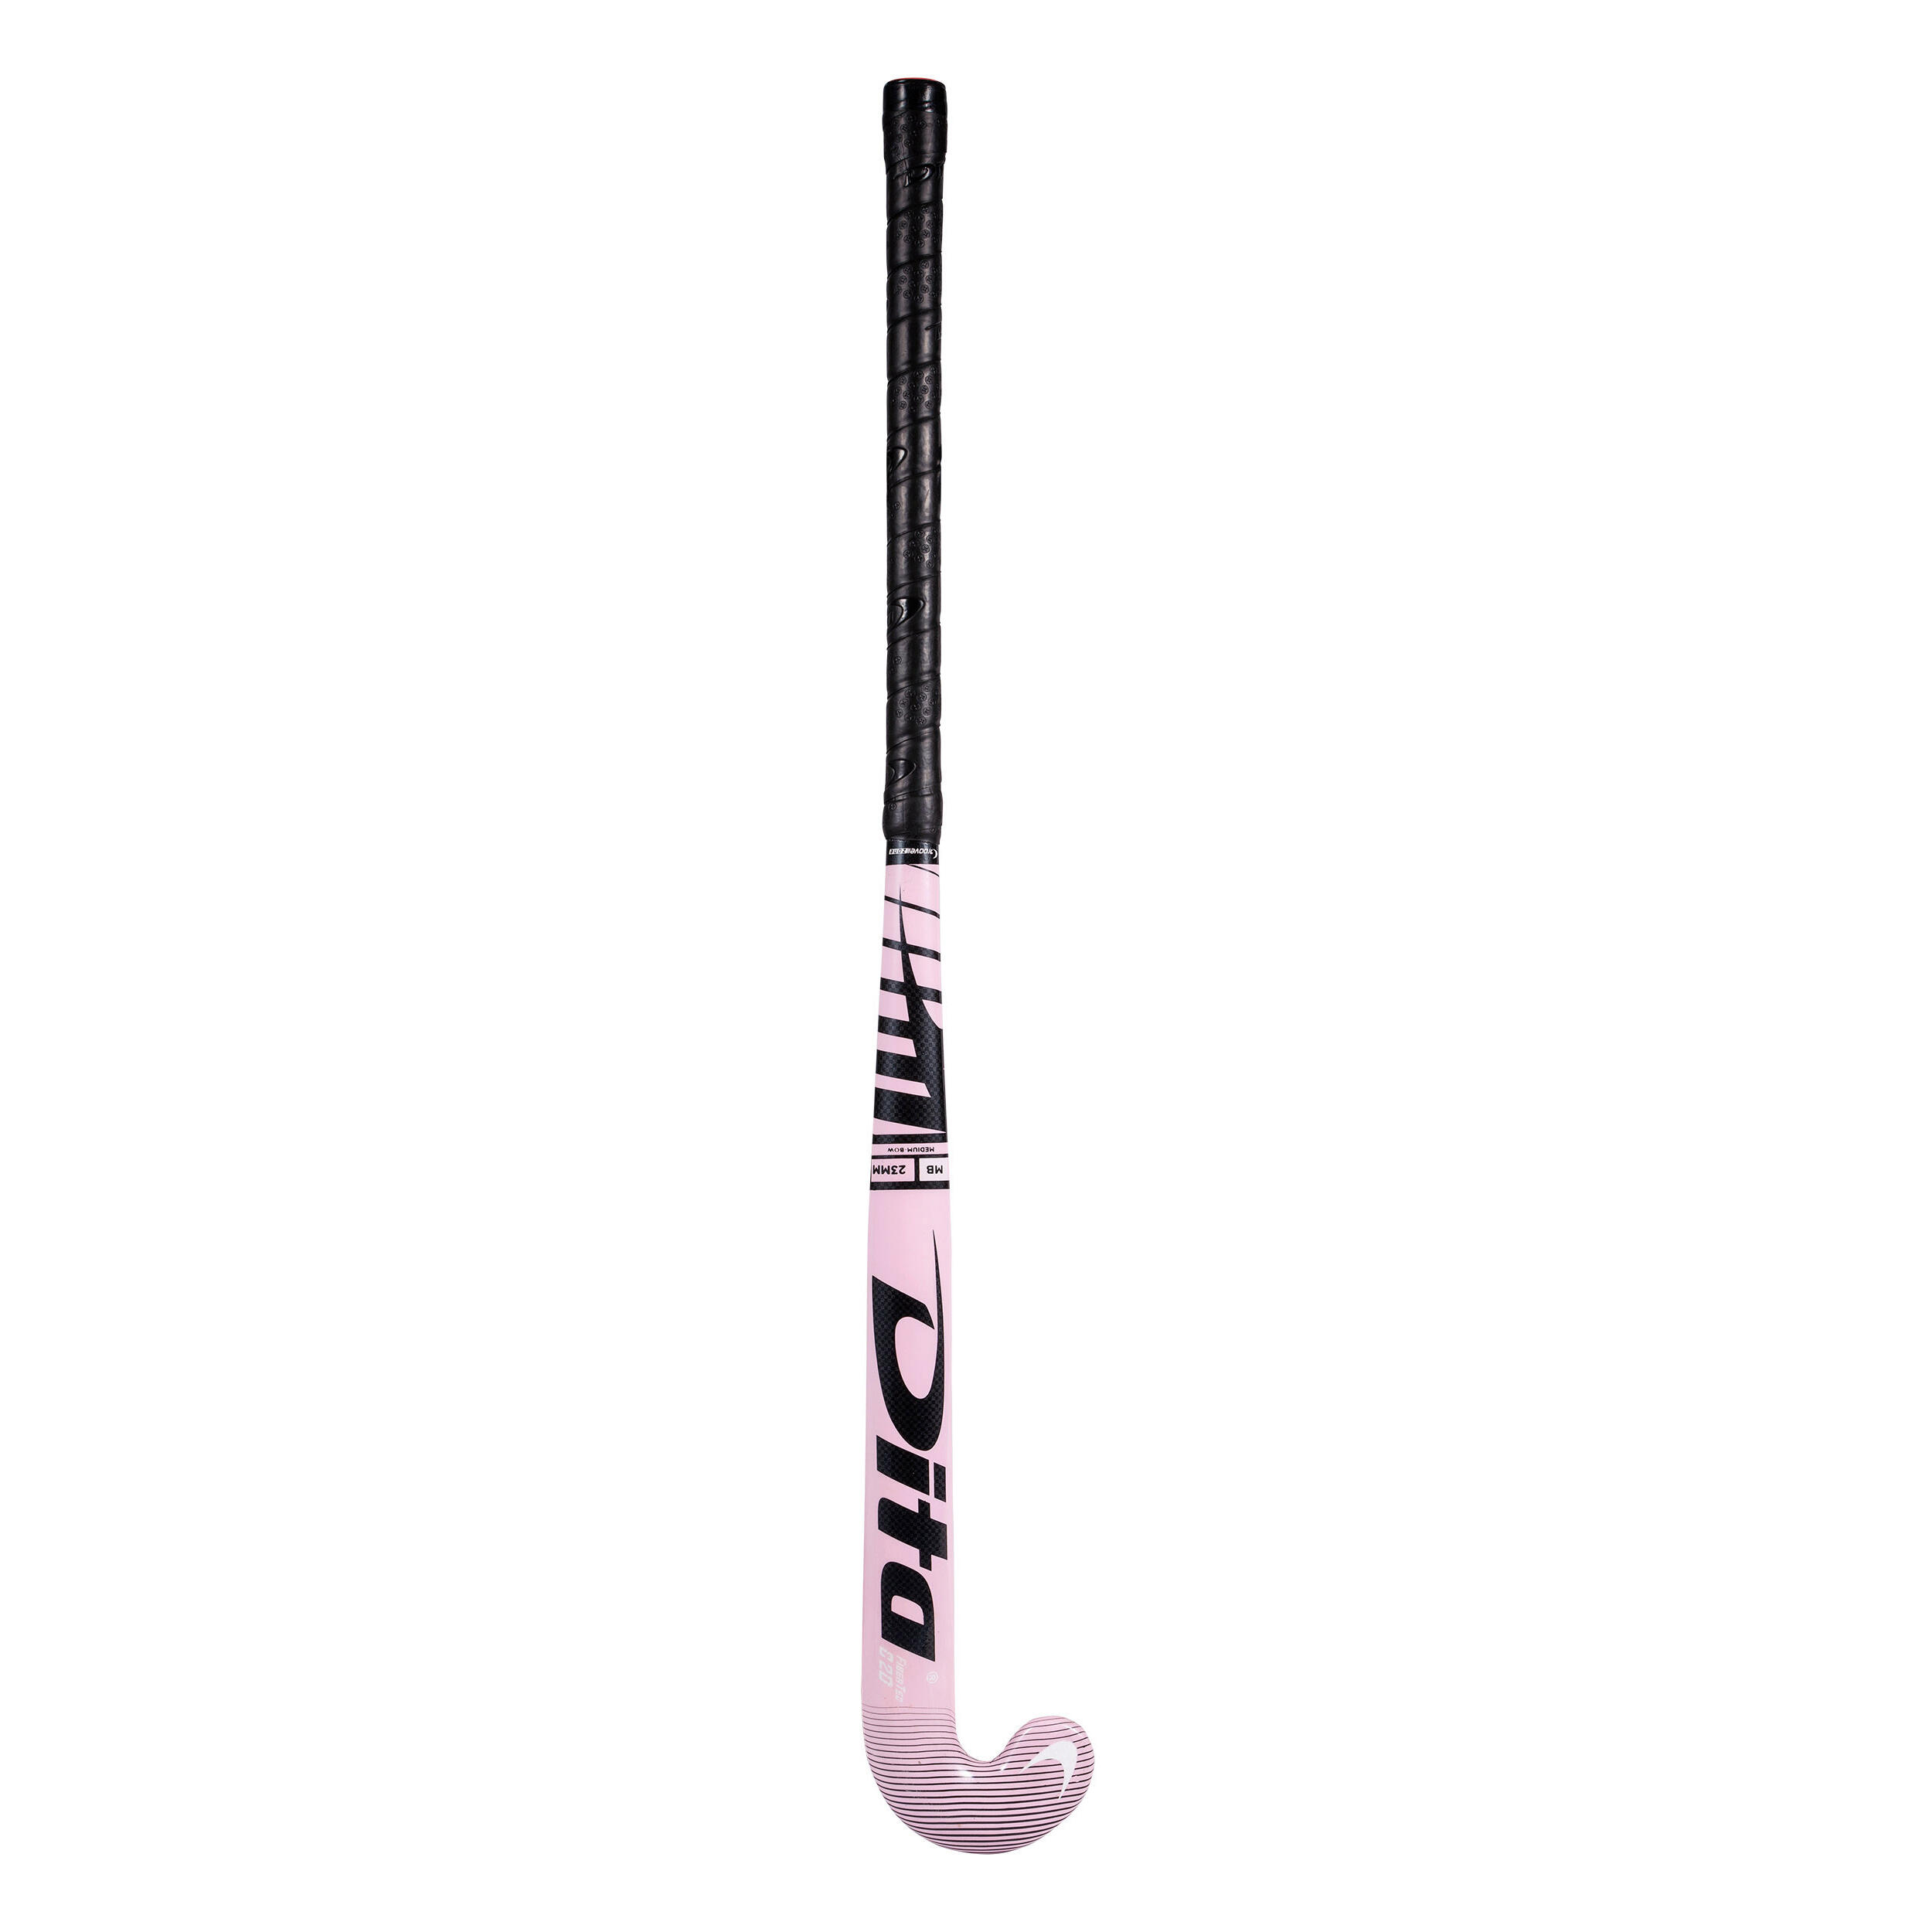 Youth Mid Bow Field Hockey Stick 20% Carbon FiberTec C20 - Pink 2/10